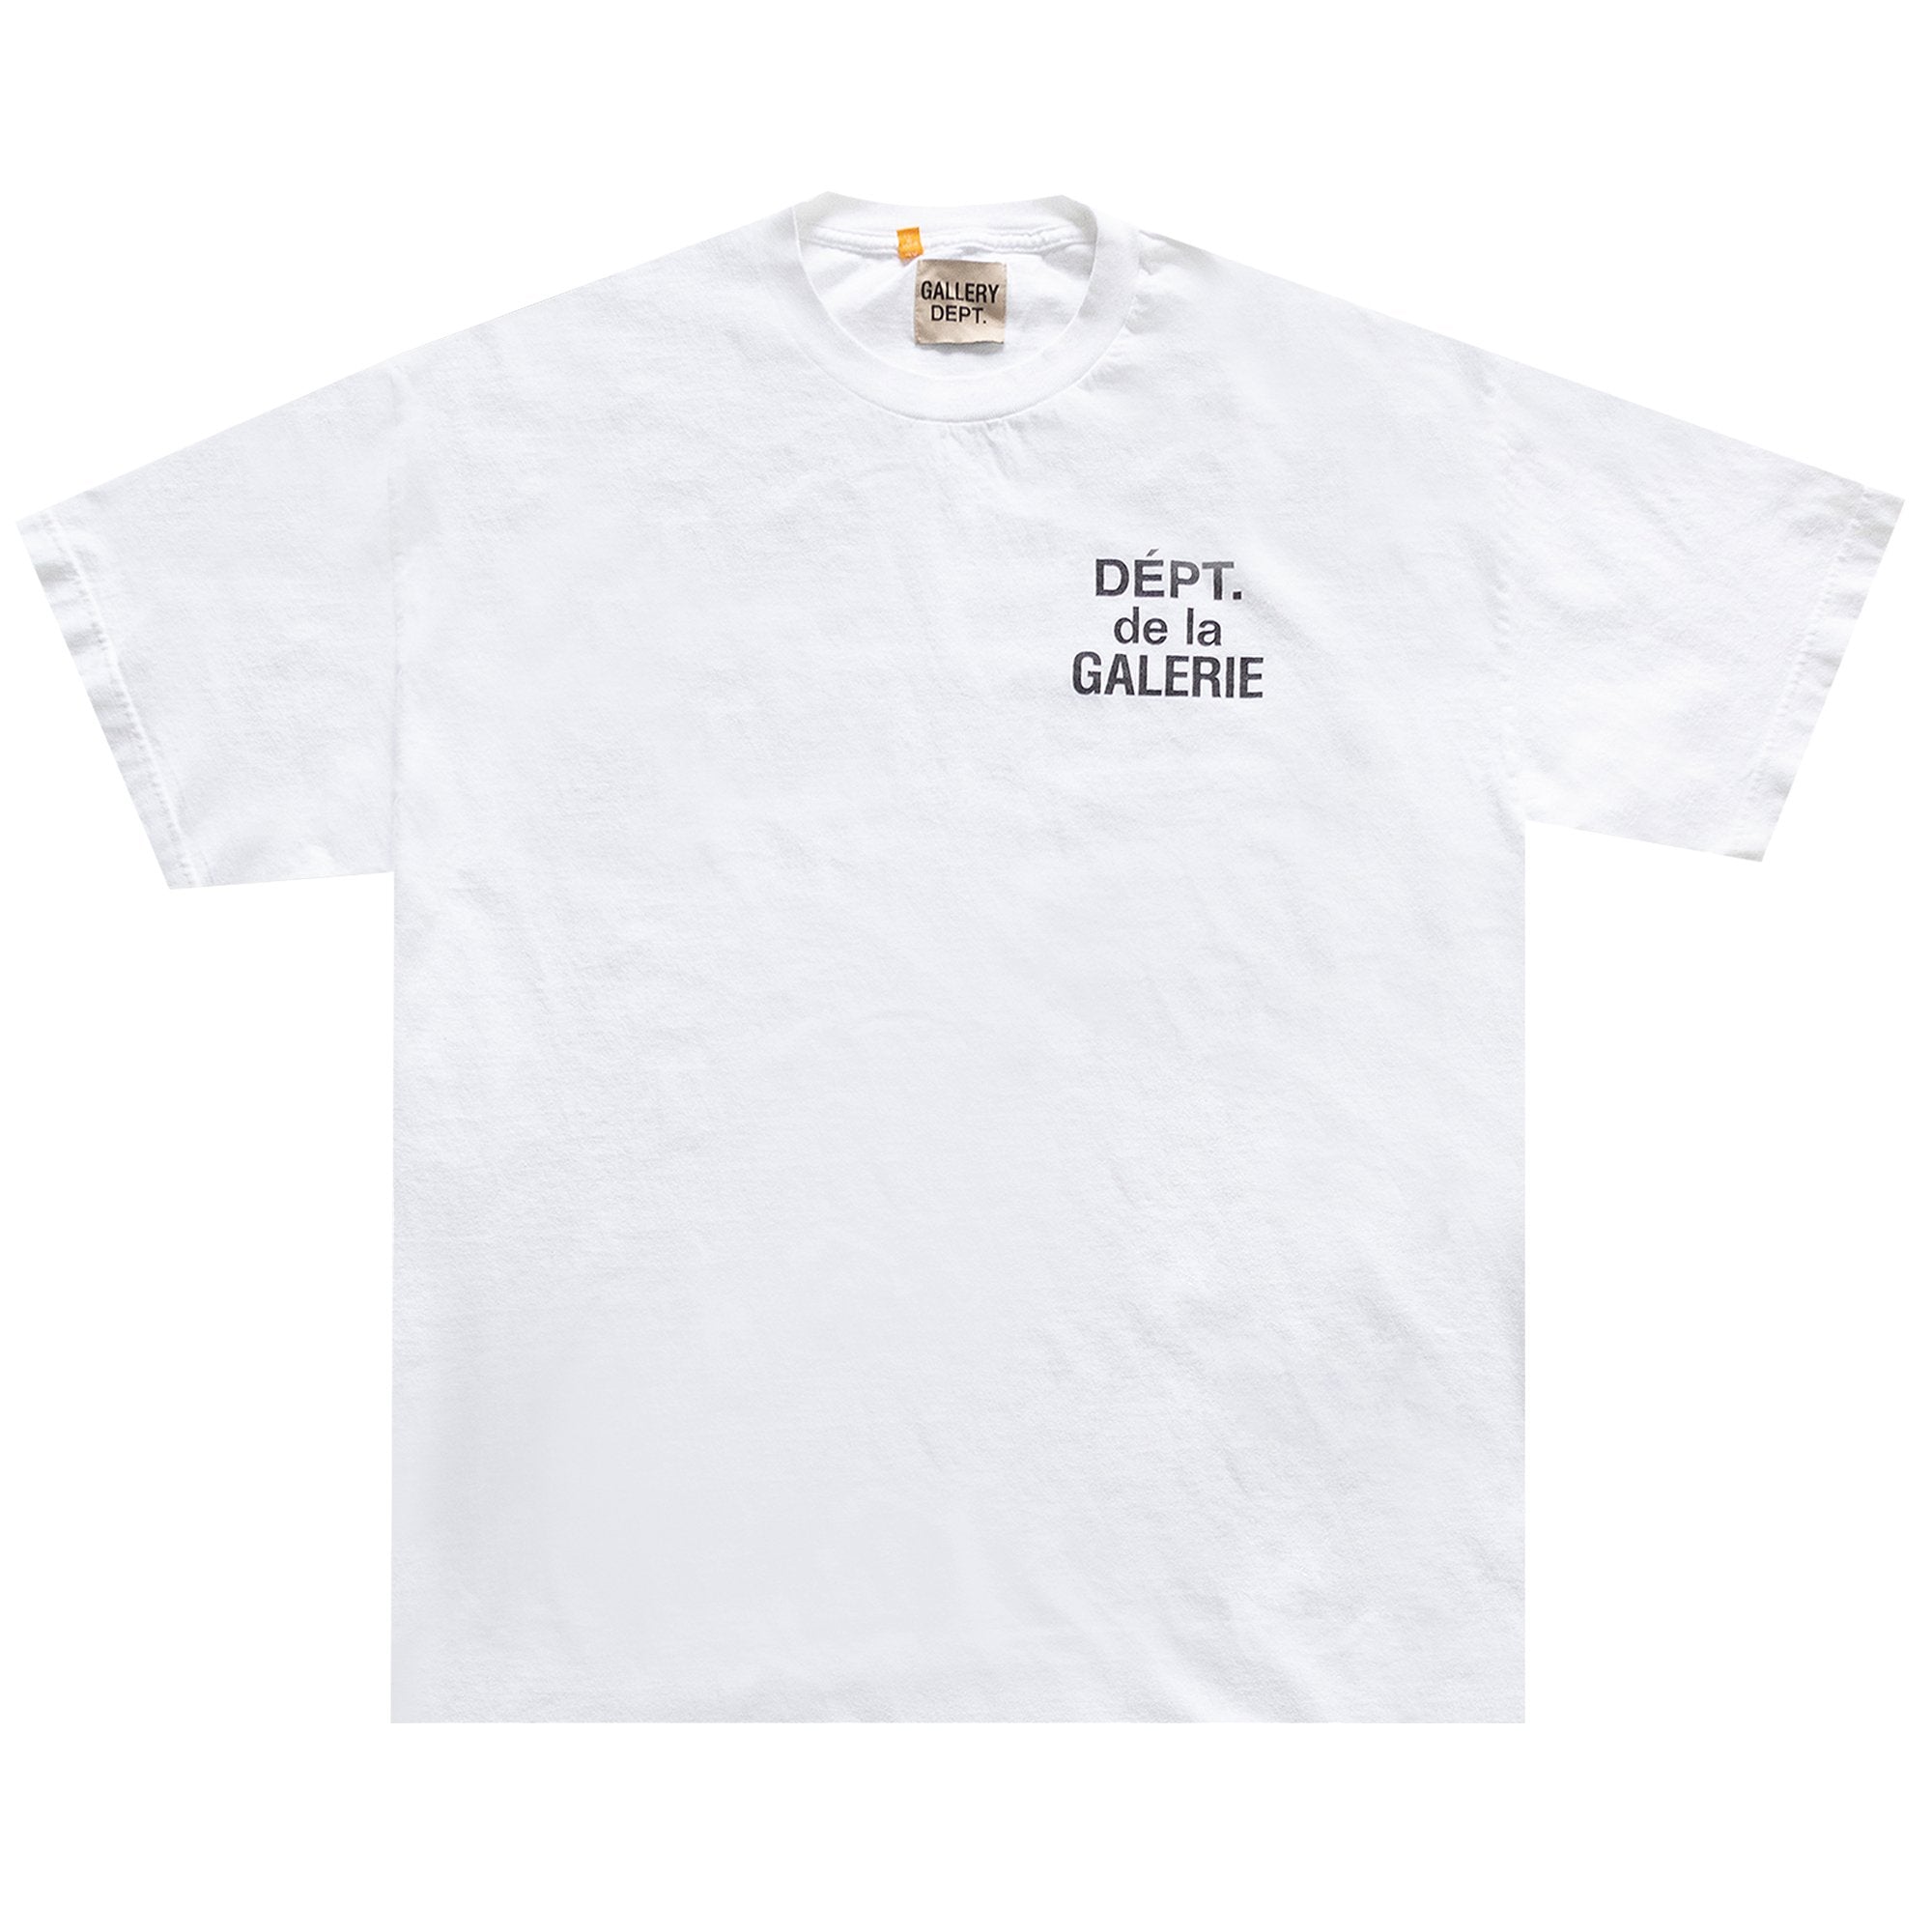 Gallery Dept. Souvenir French Logo T-shirt White